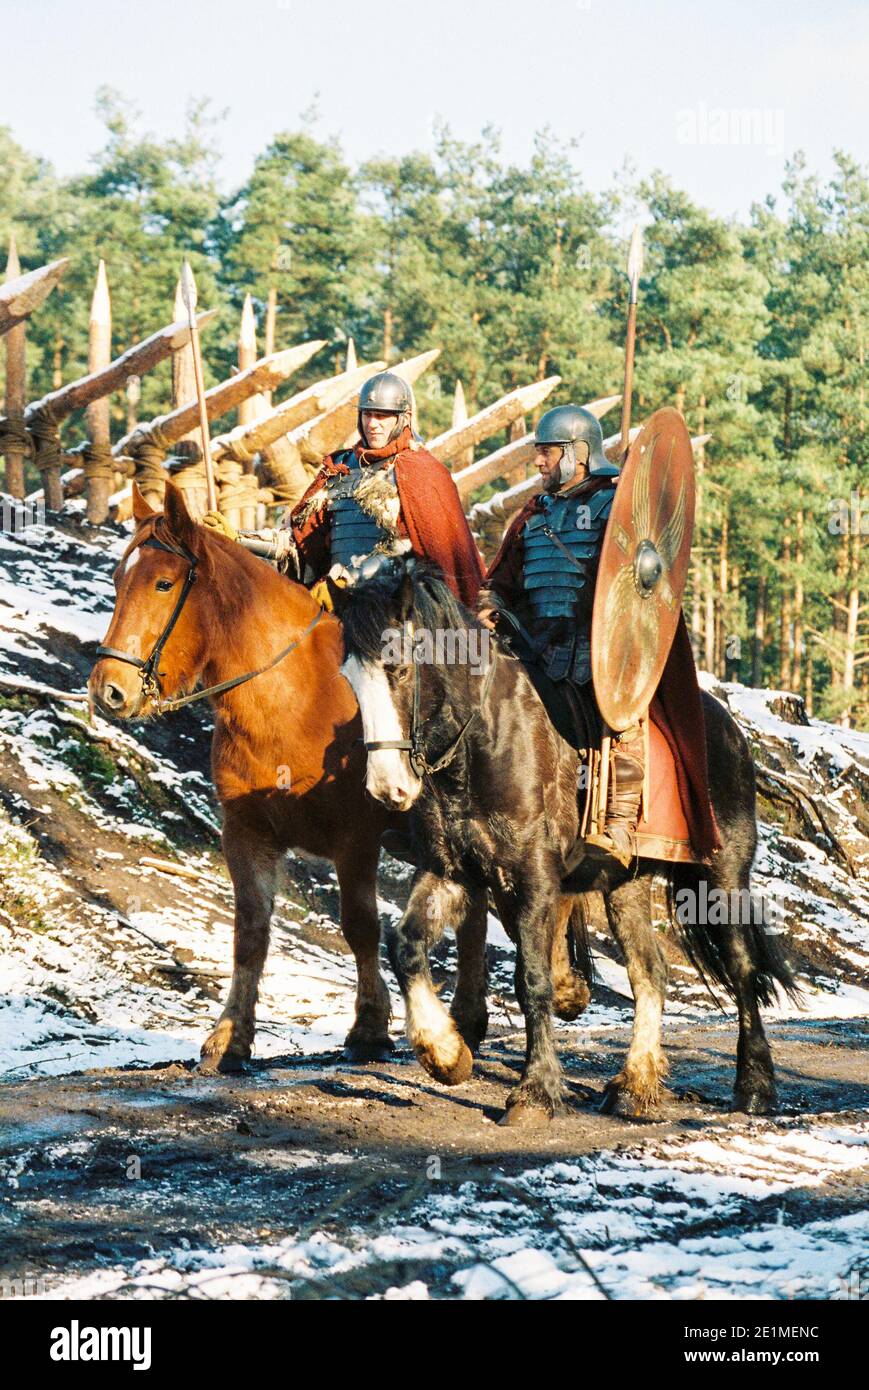 The Gladiator film set 1999 for the opening battle, set in 'Germania', Bourne Woods, Farnham, Surrey, England, United Kingdom Stock Photo